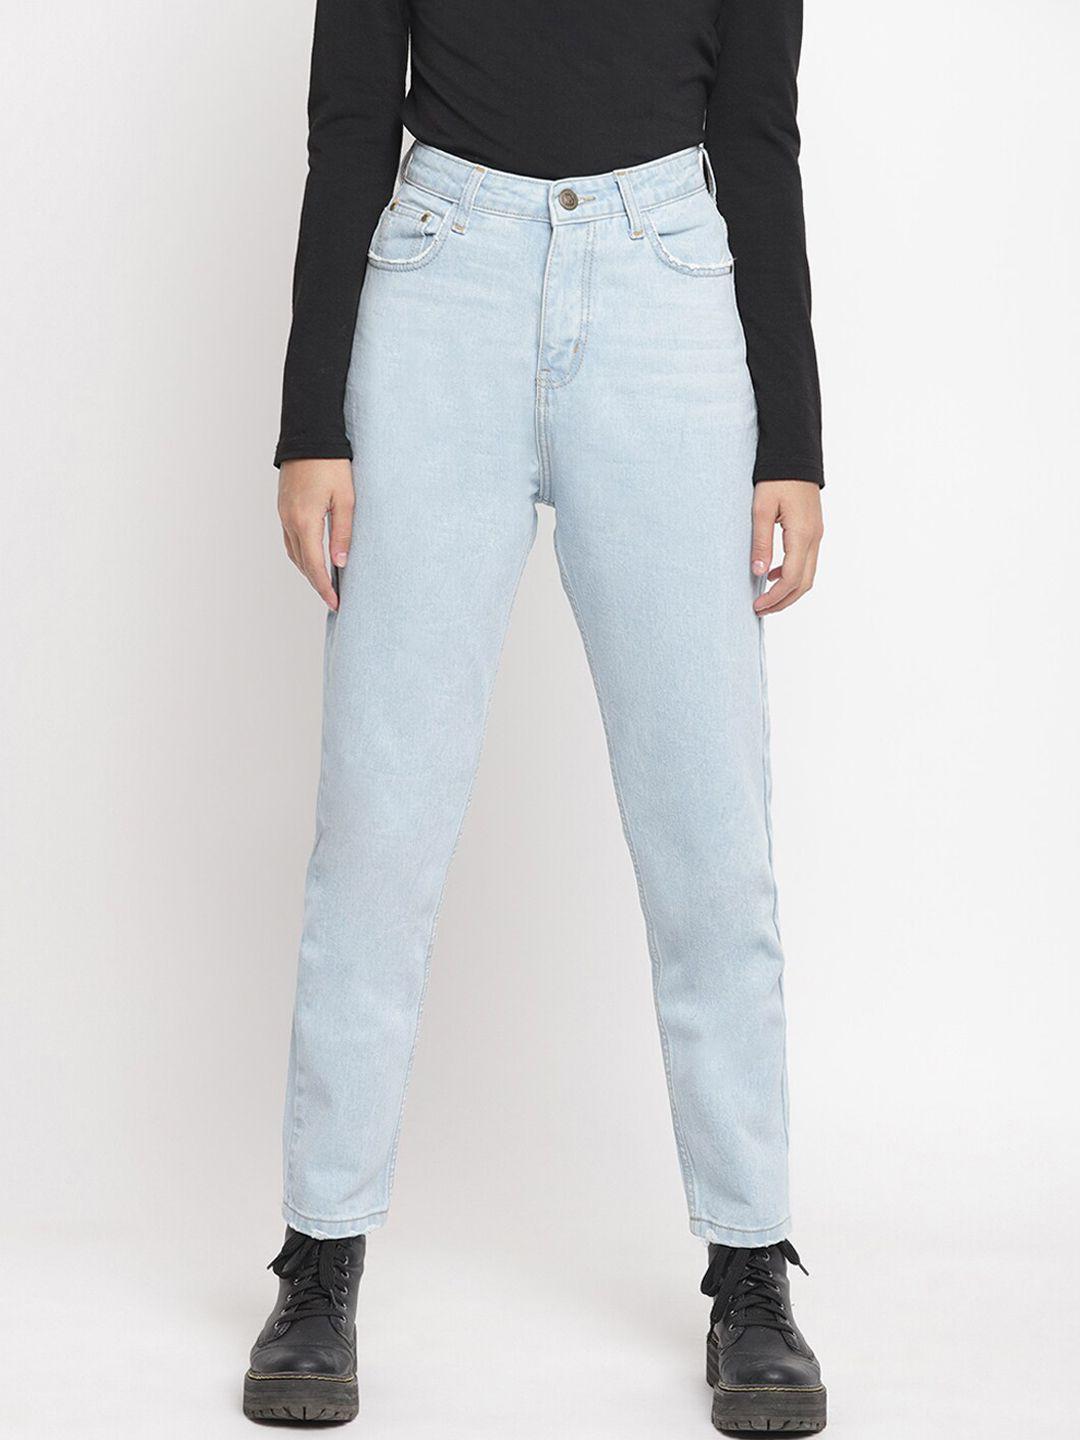 belliskey-women-blue-slim-fit-high-rise-stretchable-jeans